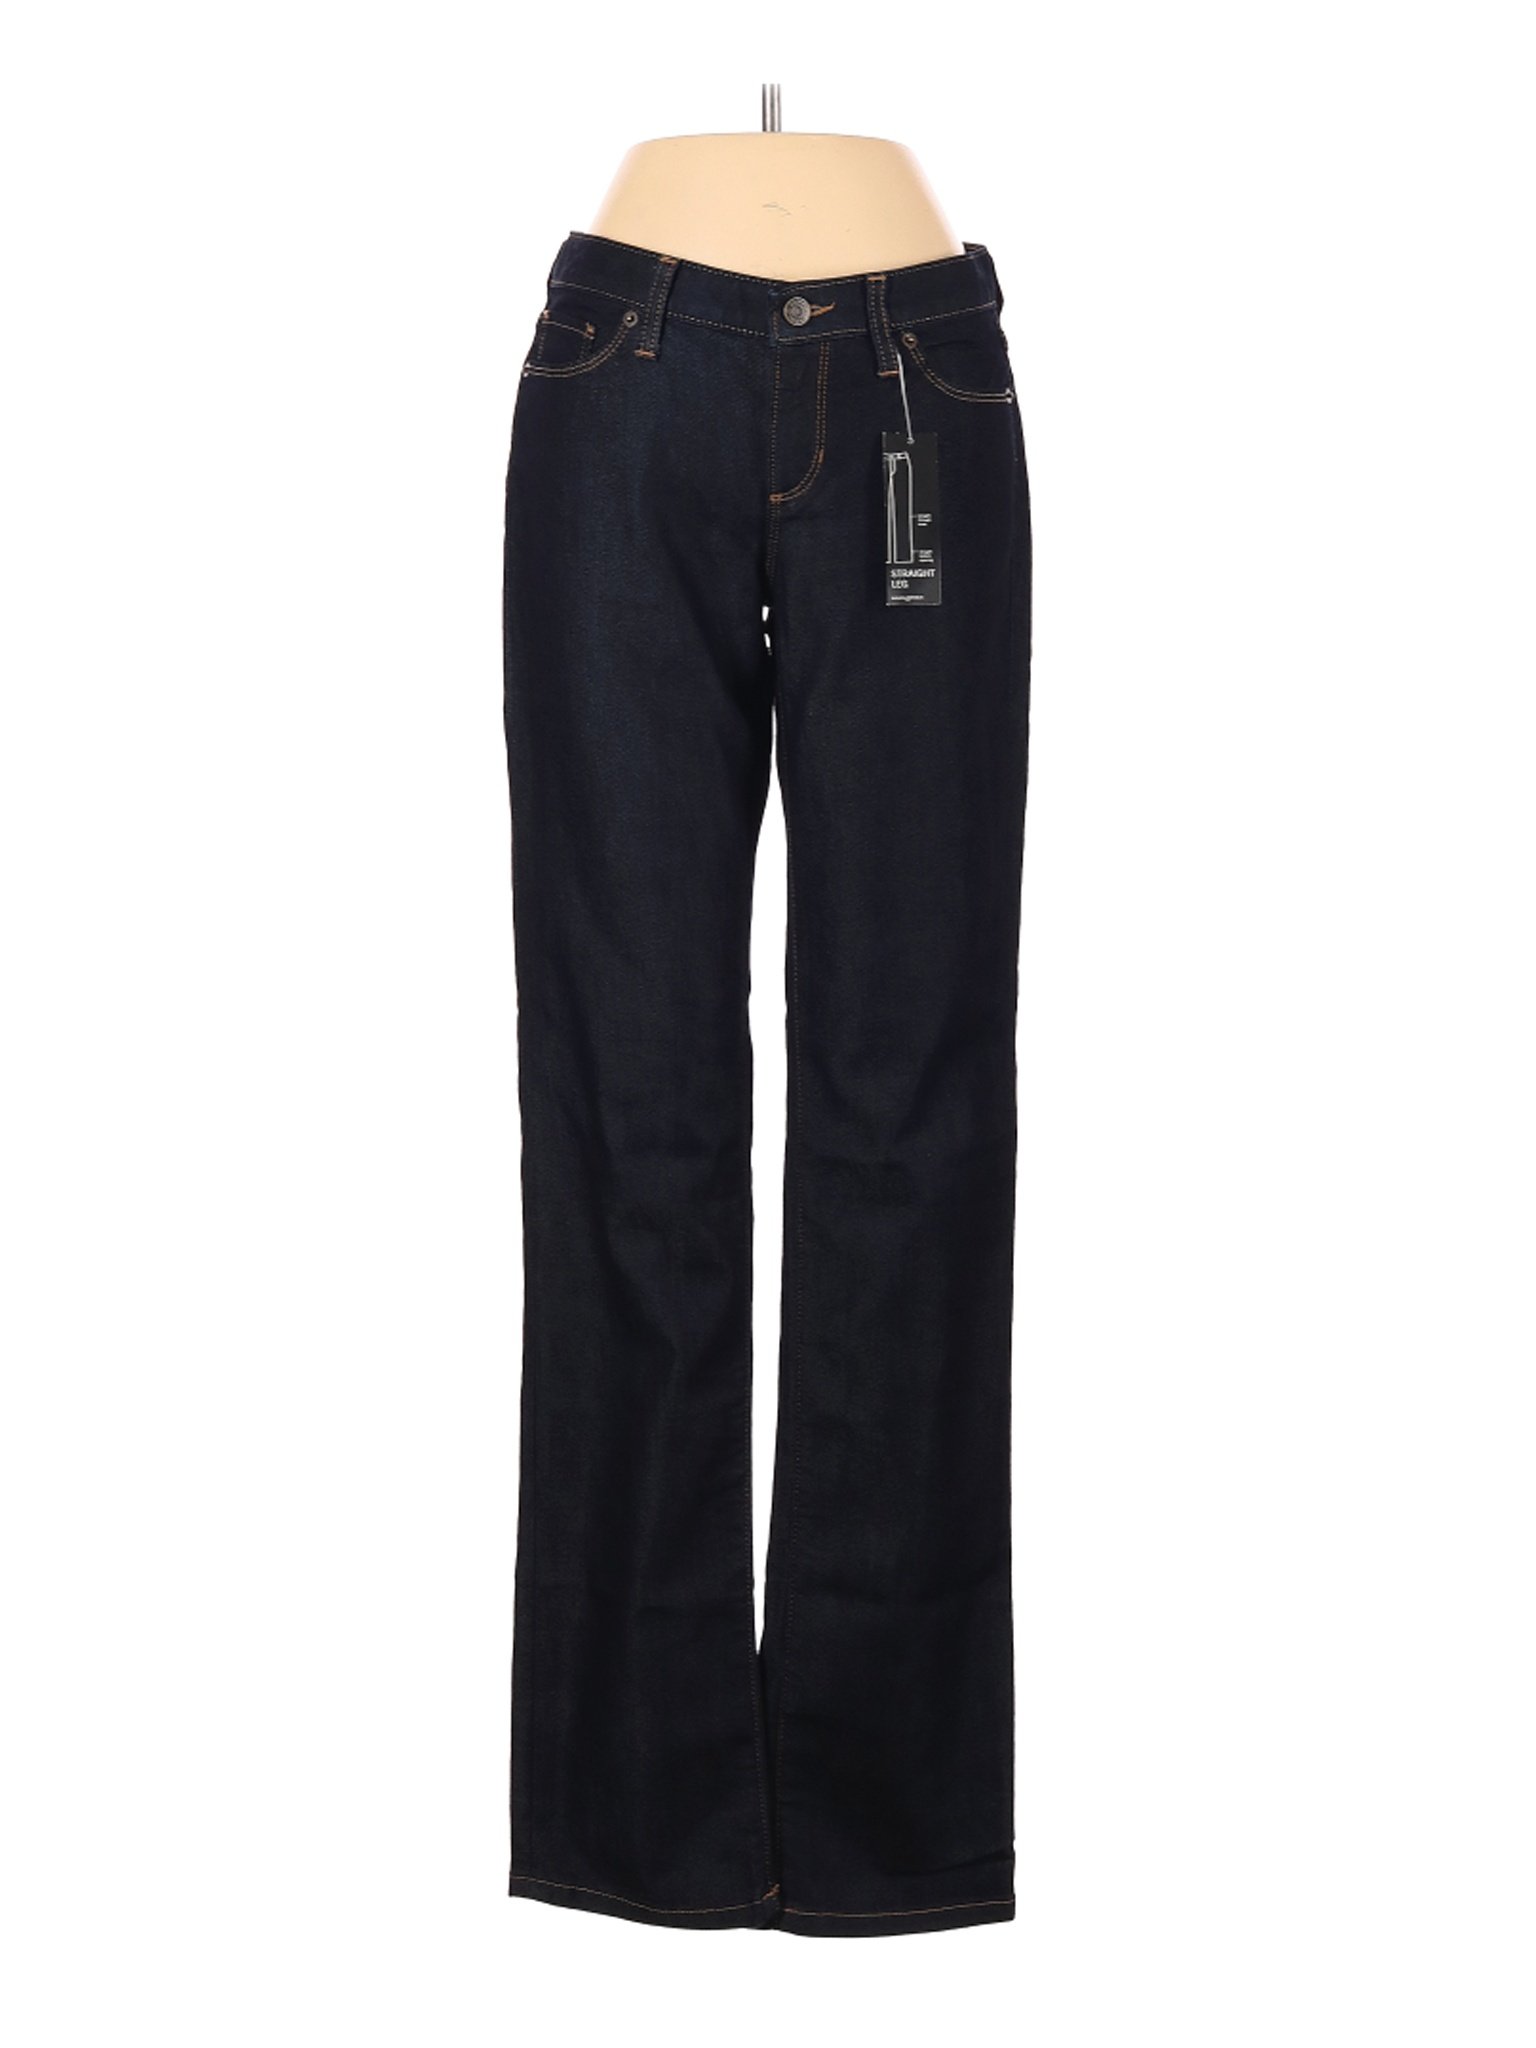 NWT Banana Republic Factory Store Women Black Jeans 26W | eBay